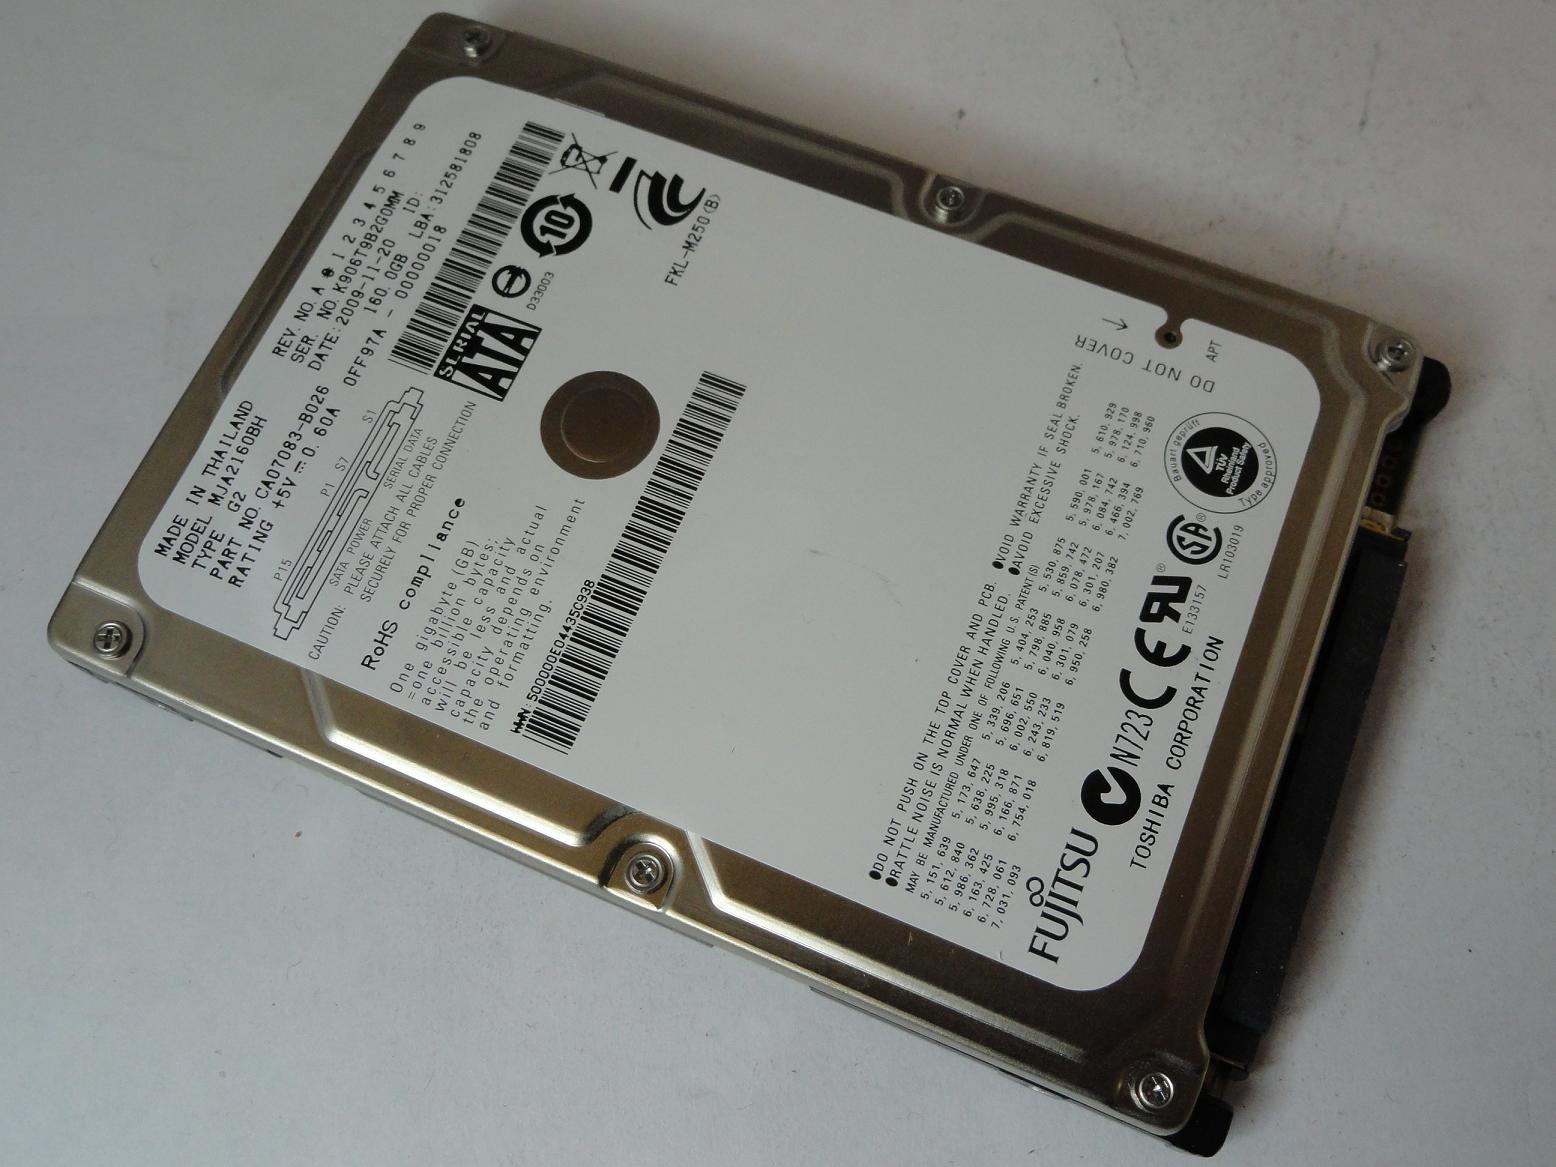 CA07083-B026 - Fujitsu 160GB SATA 5400rpm 2.5in HDD - Refurbished